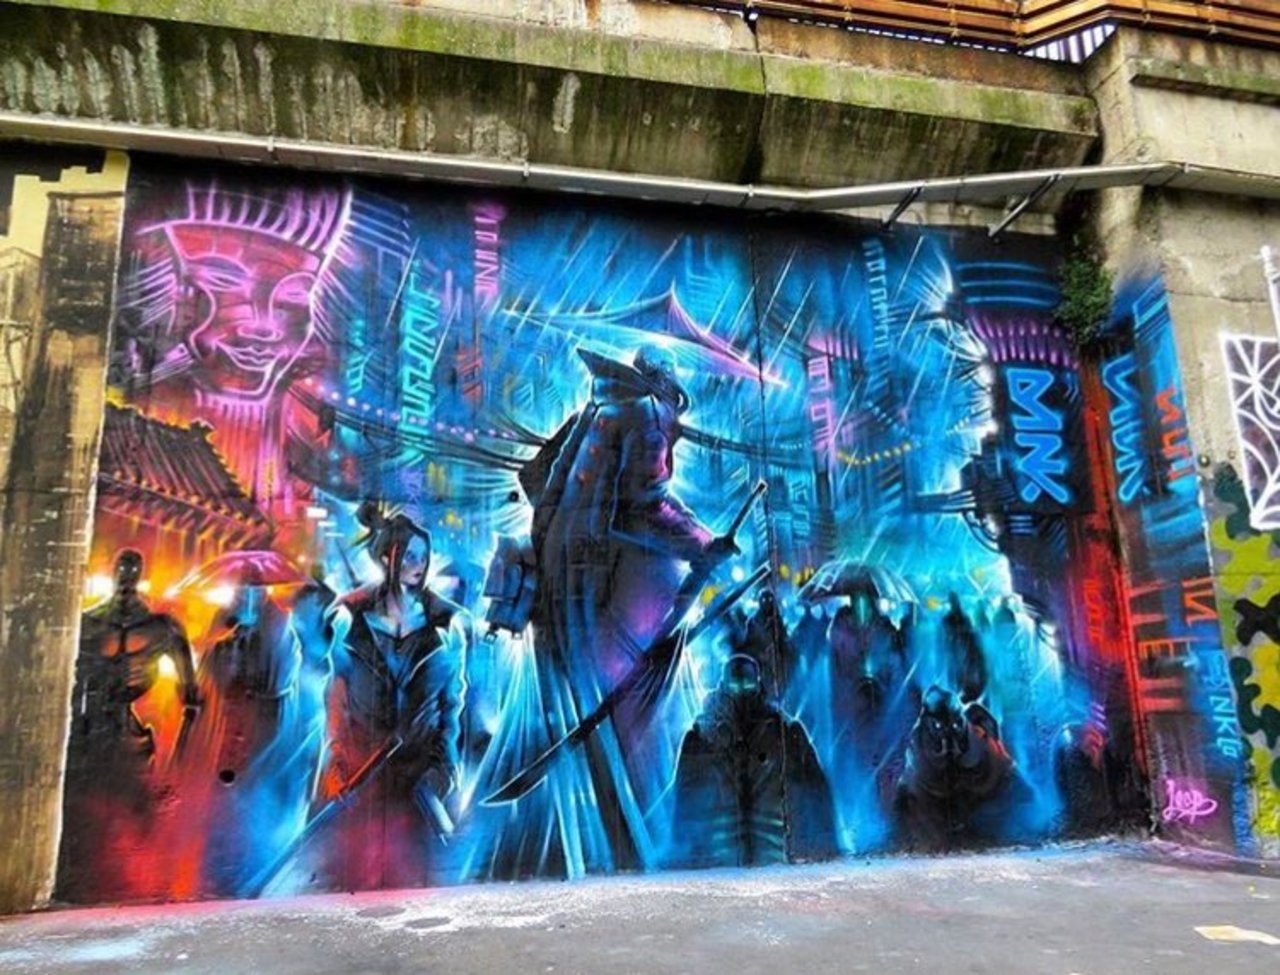 New Street Art - Dan Kitchener in Milan, Italy #art #mural #graffiti #streetart https://t.co/La5Srh7SuE